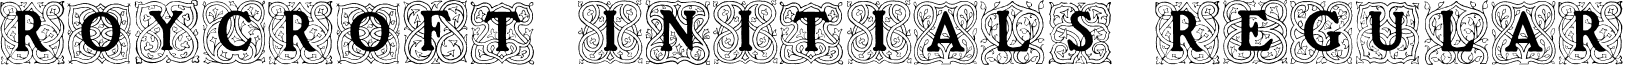 Roycroft Initials Regular roycroft-initials.regular.ttf